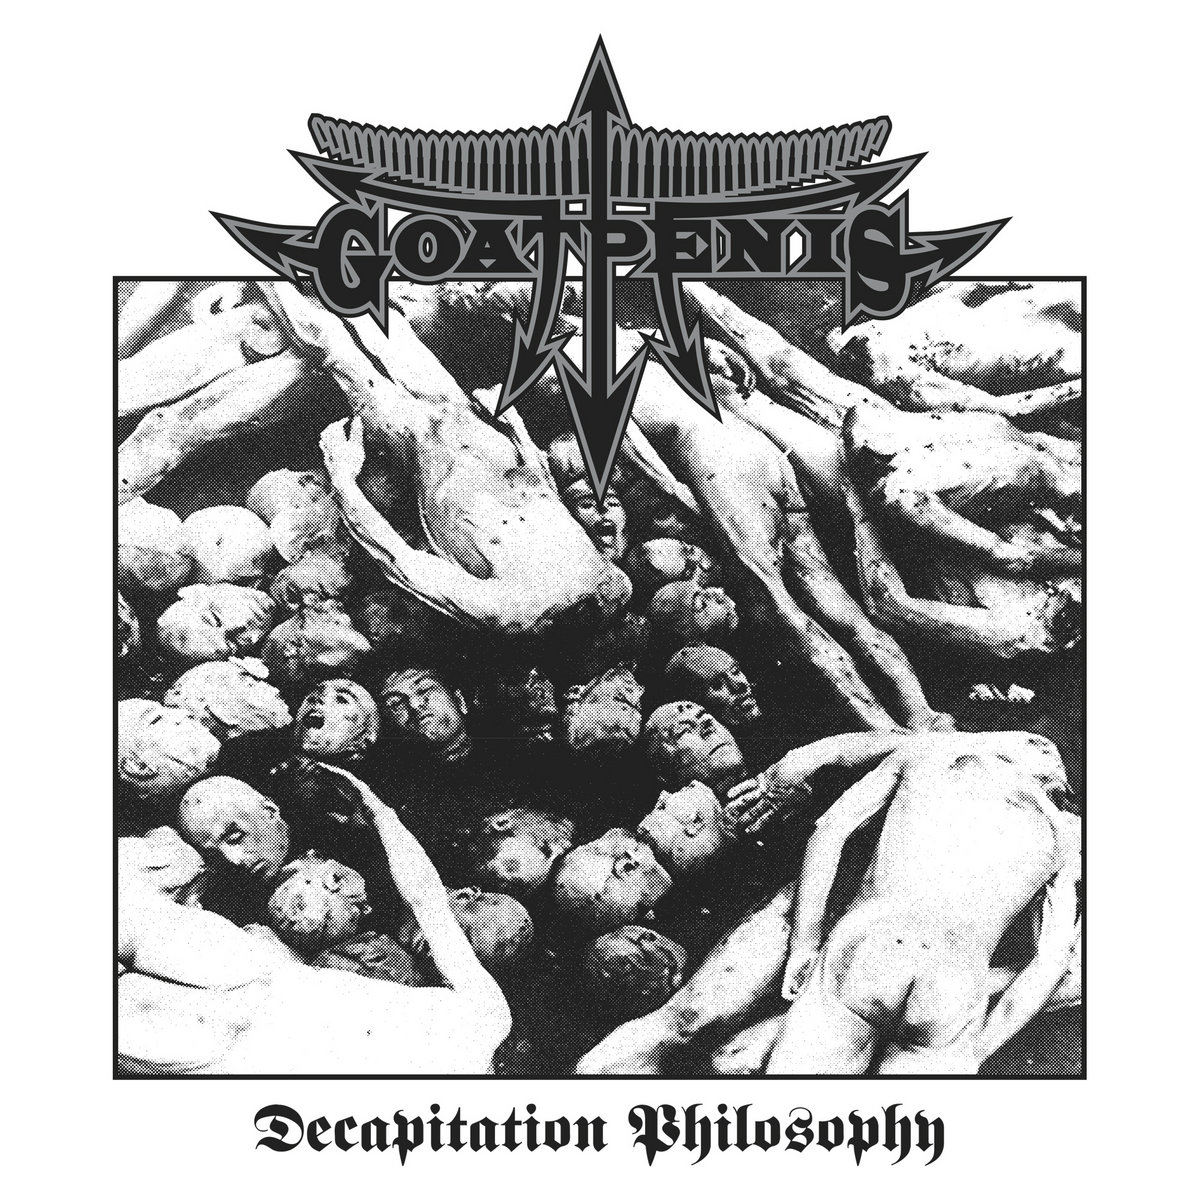 GOATPENIS - Decapitation Philosophy cover 